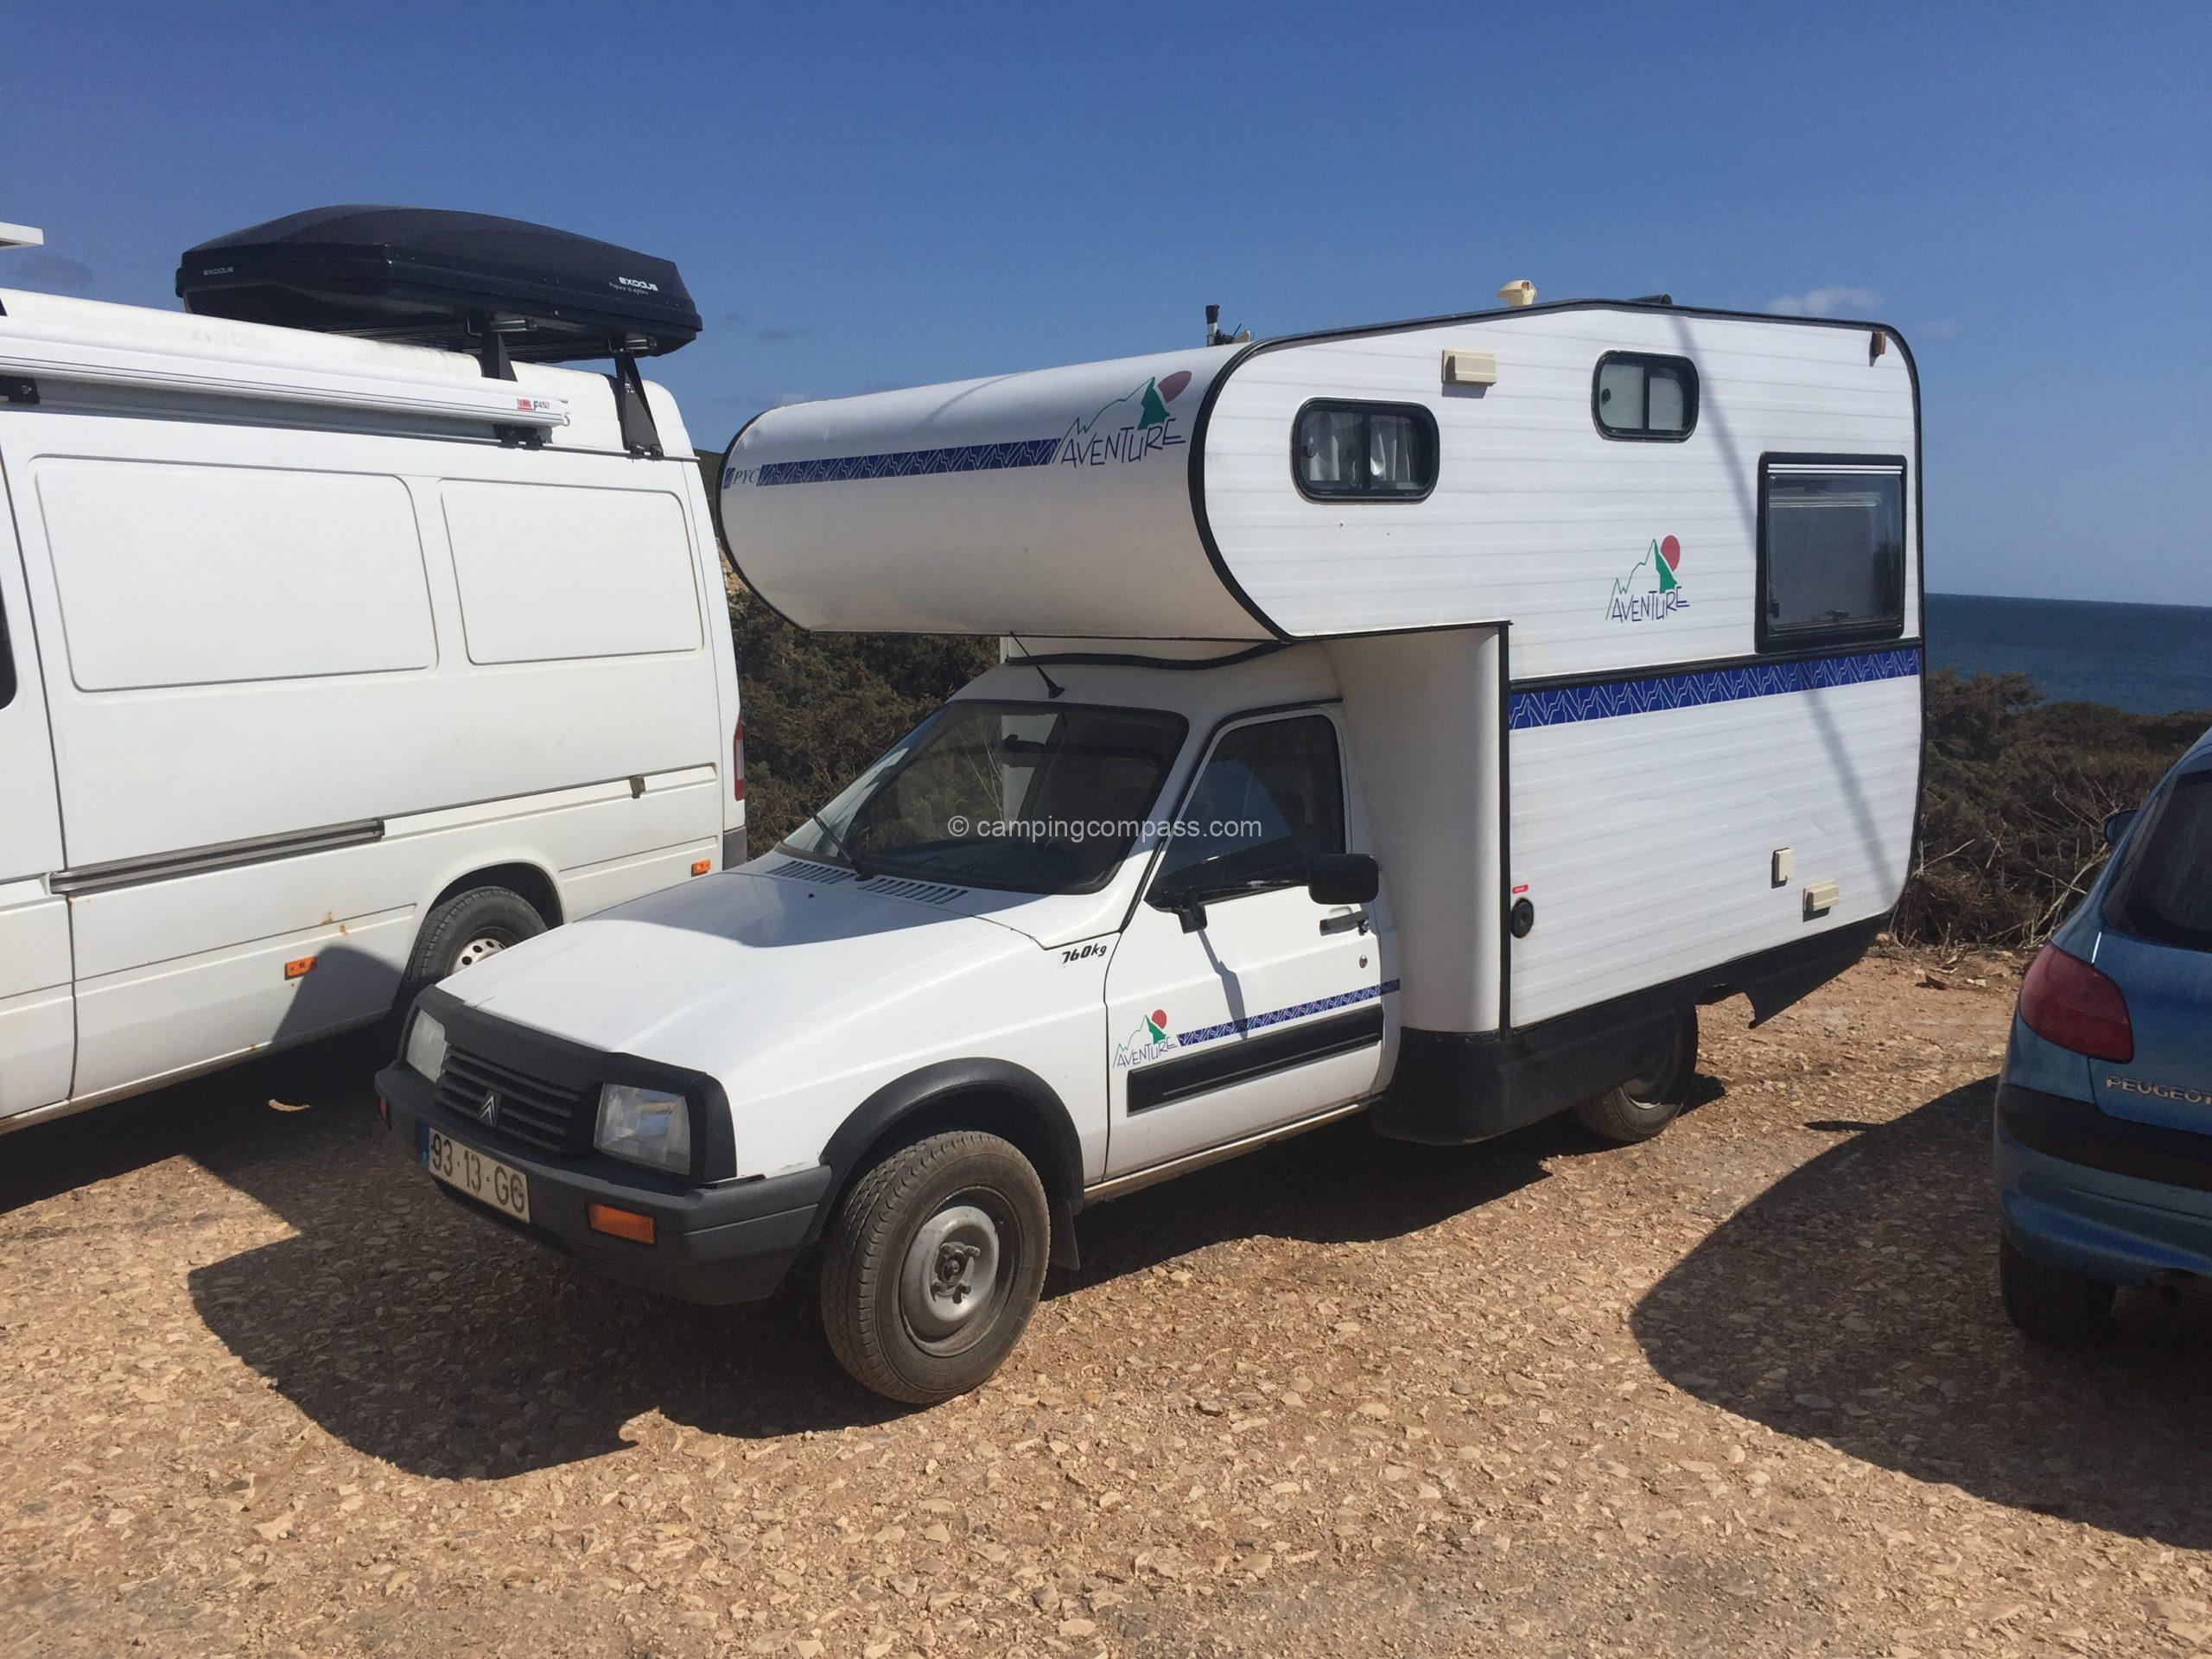 Which van to choose for camper van conversion?